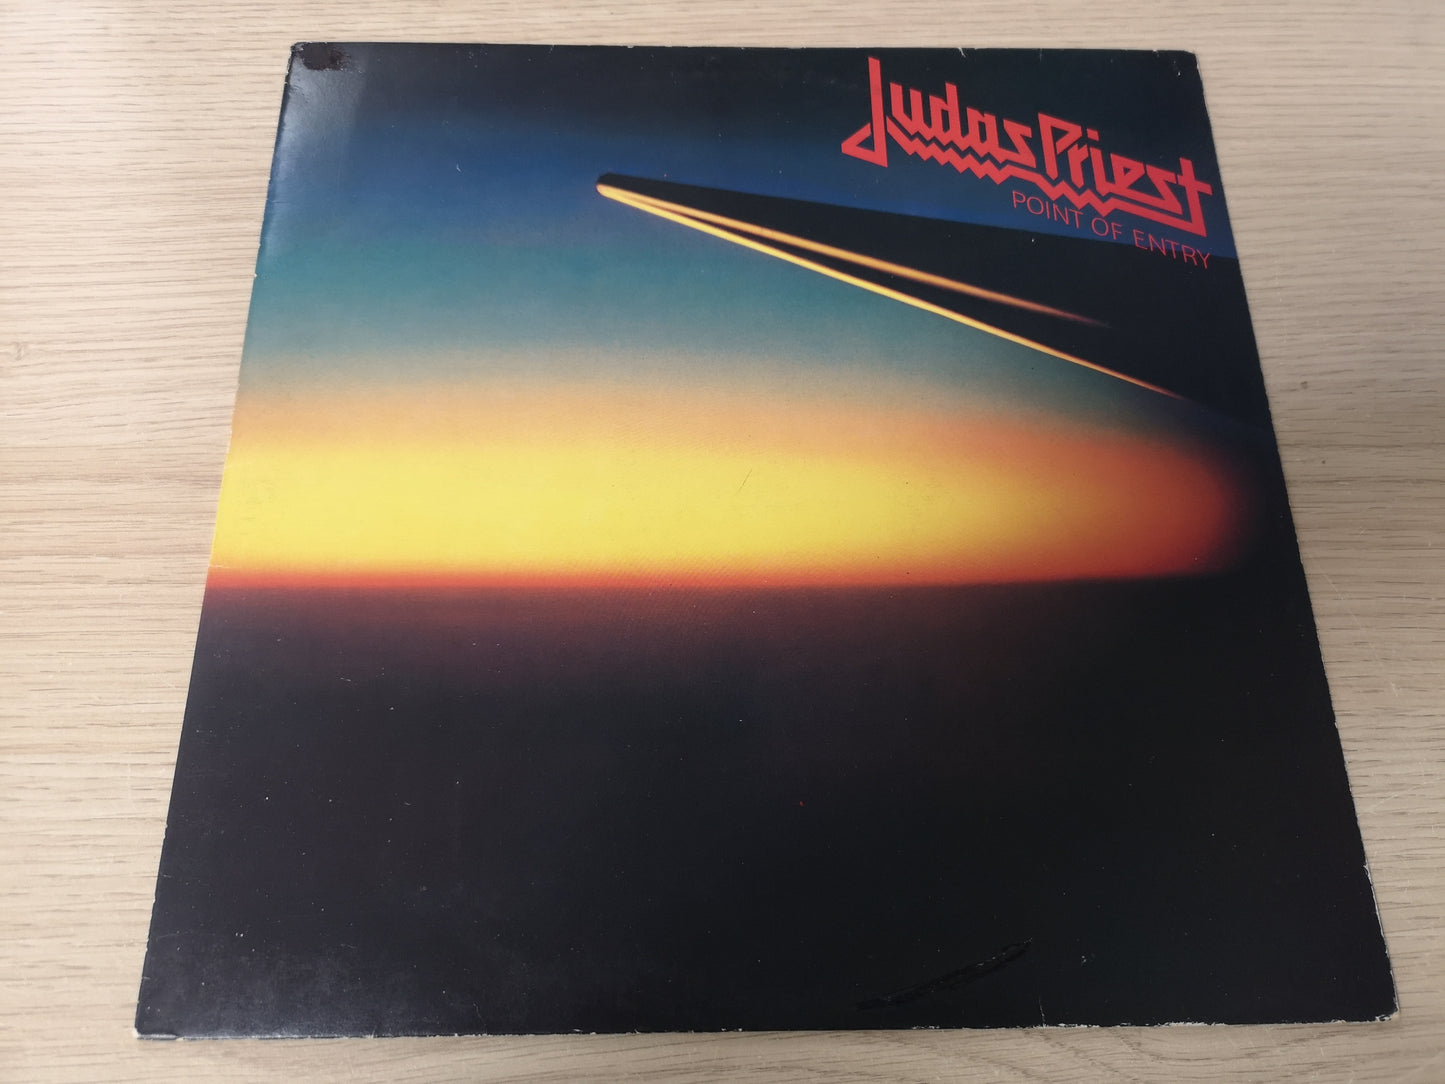 Judas Priest "Point of Entry" Orig Holland 1981 VG++/VG++